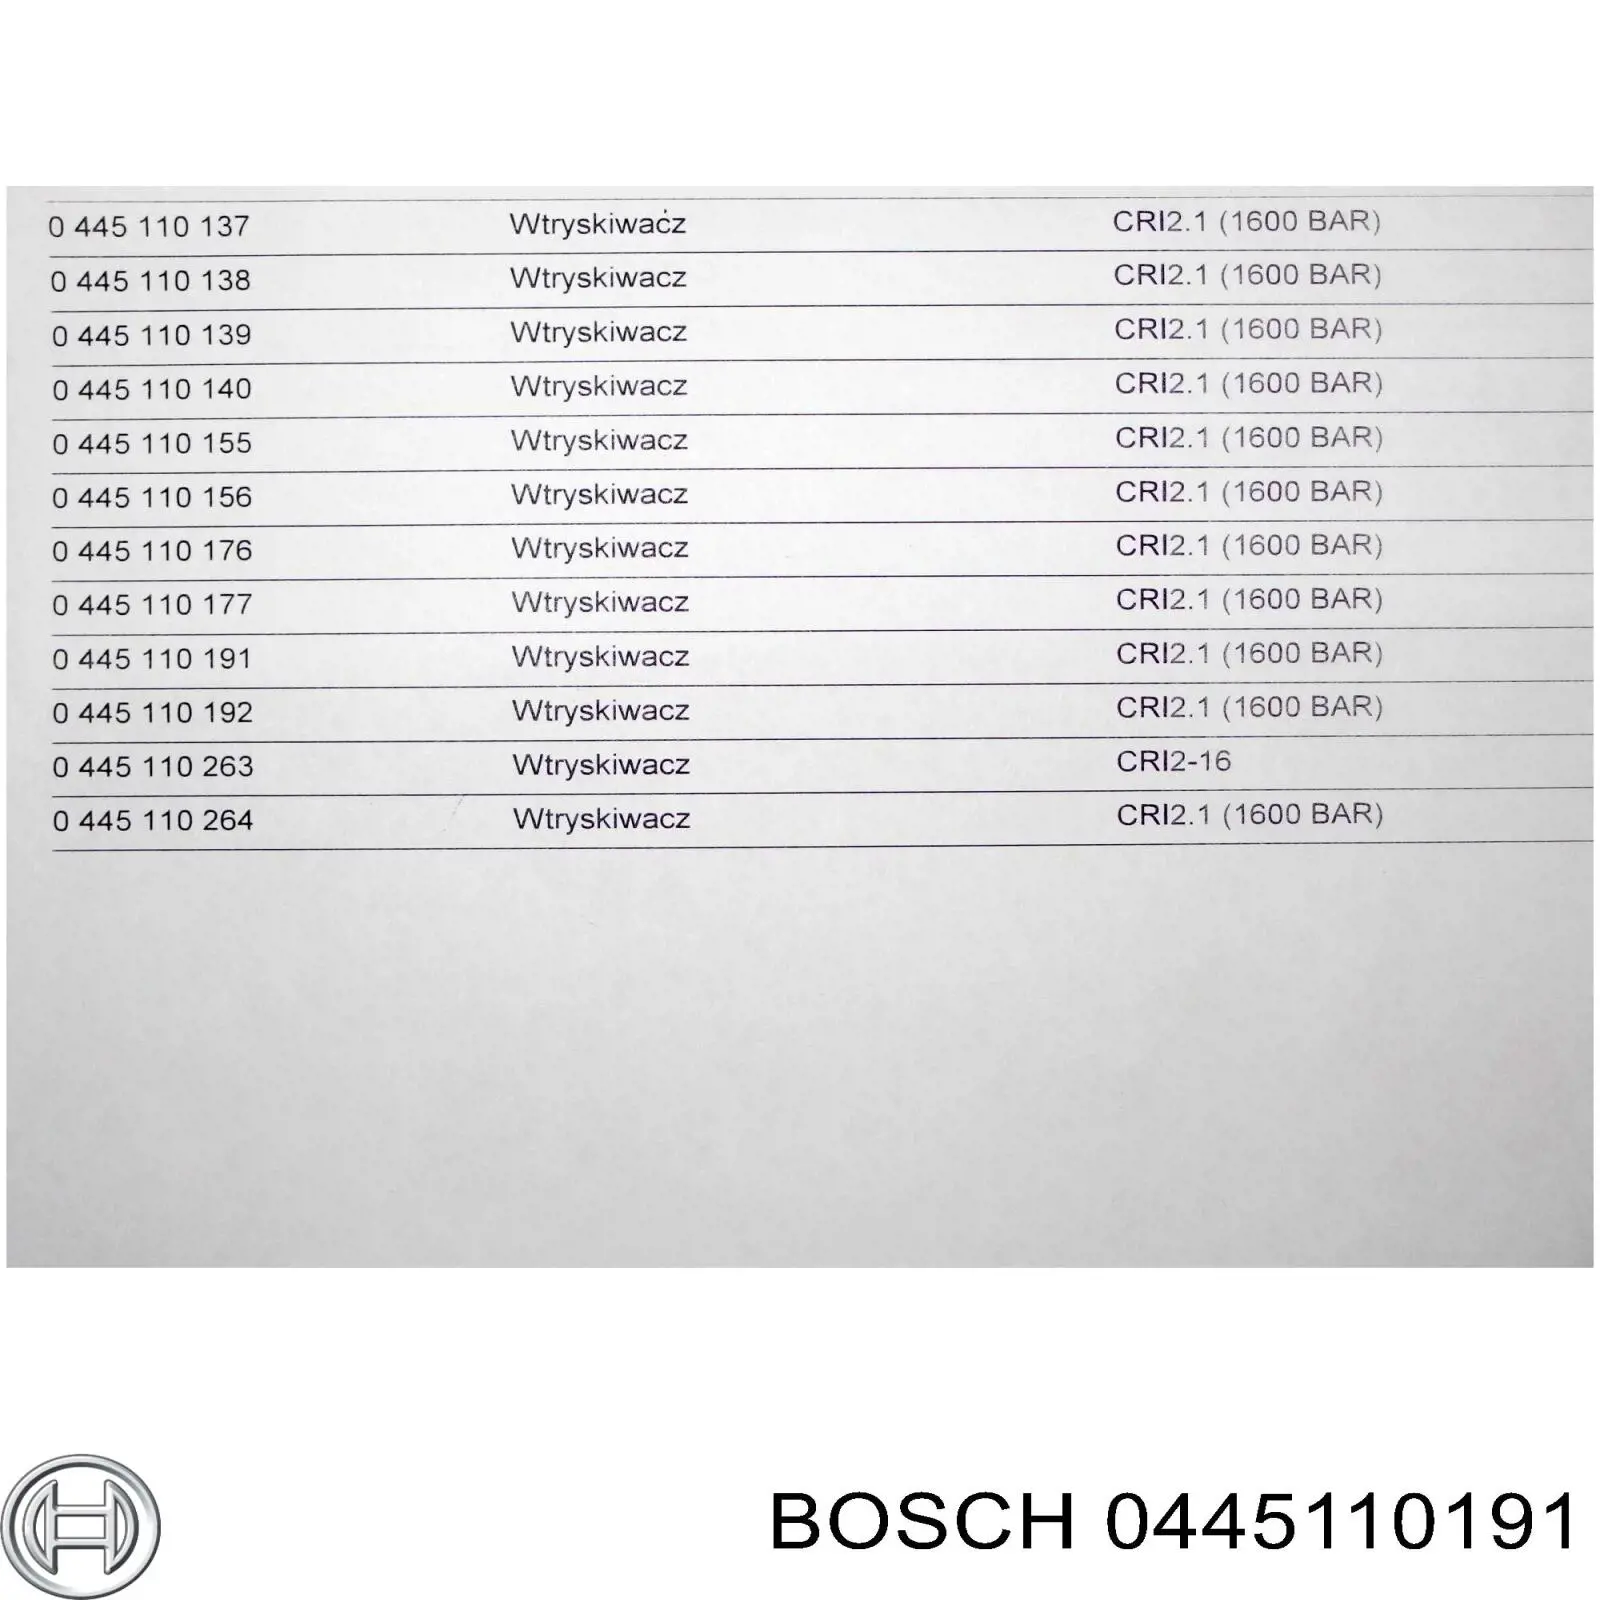 0445110191 Bosch bomba/injetor